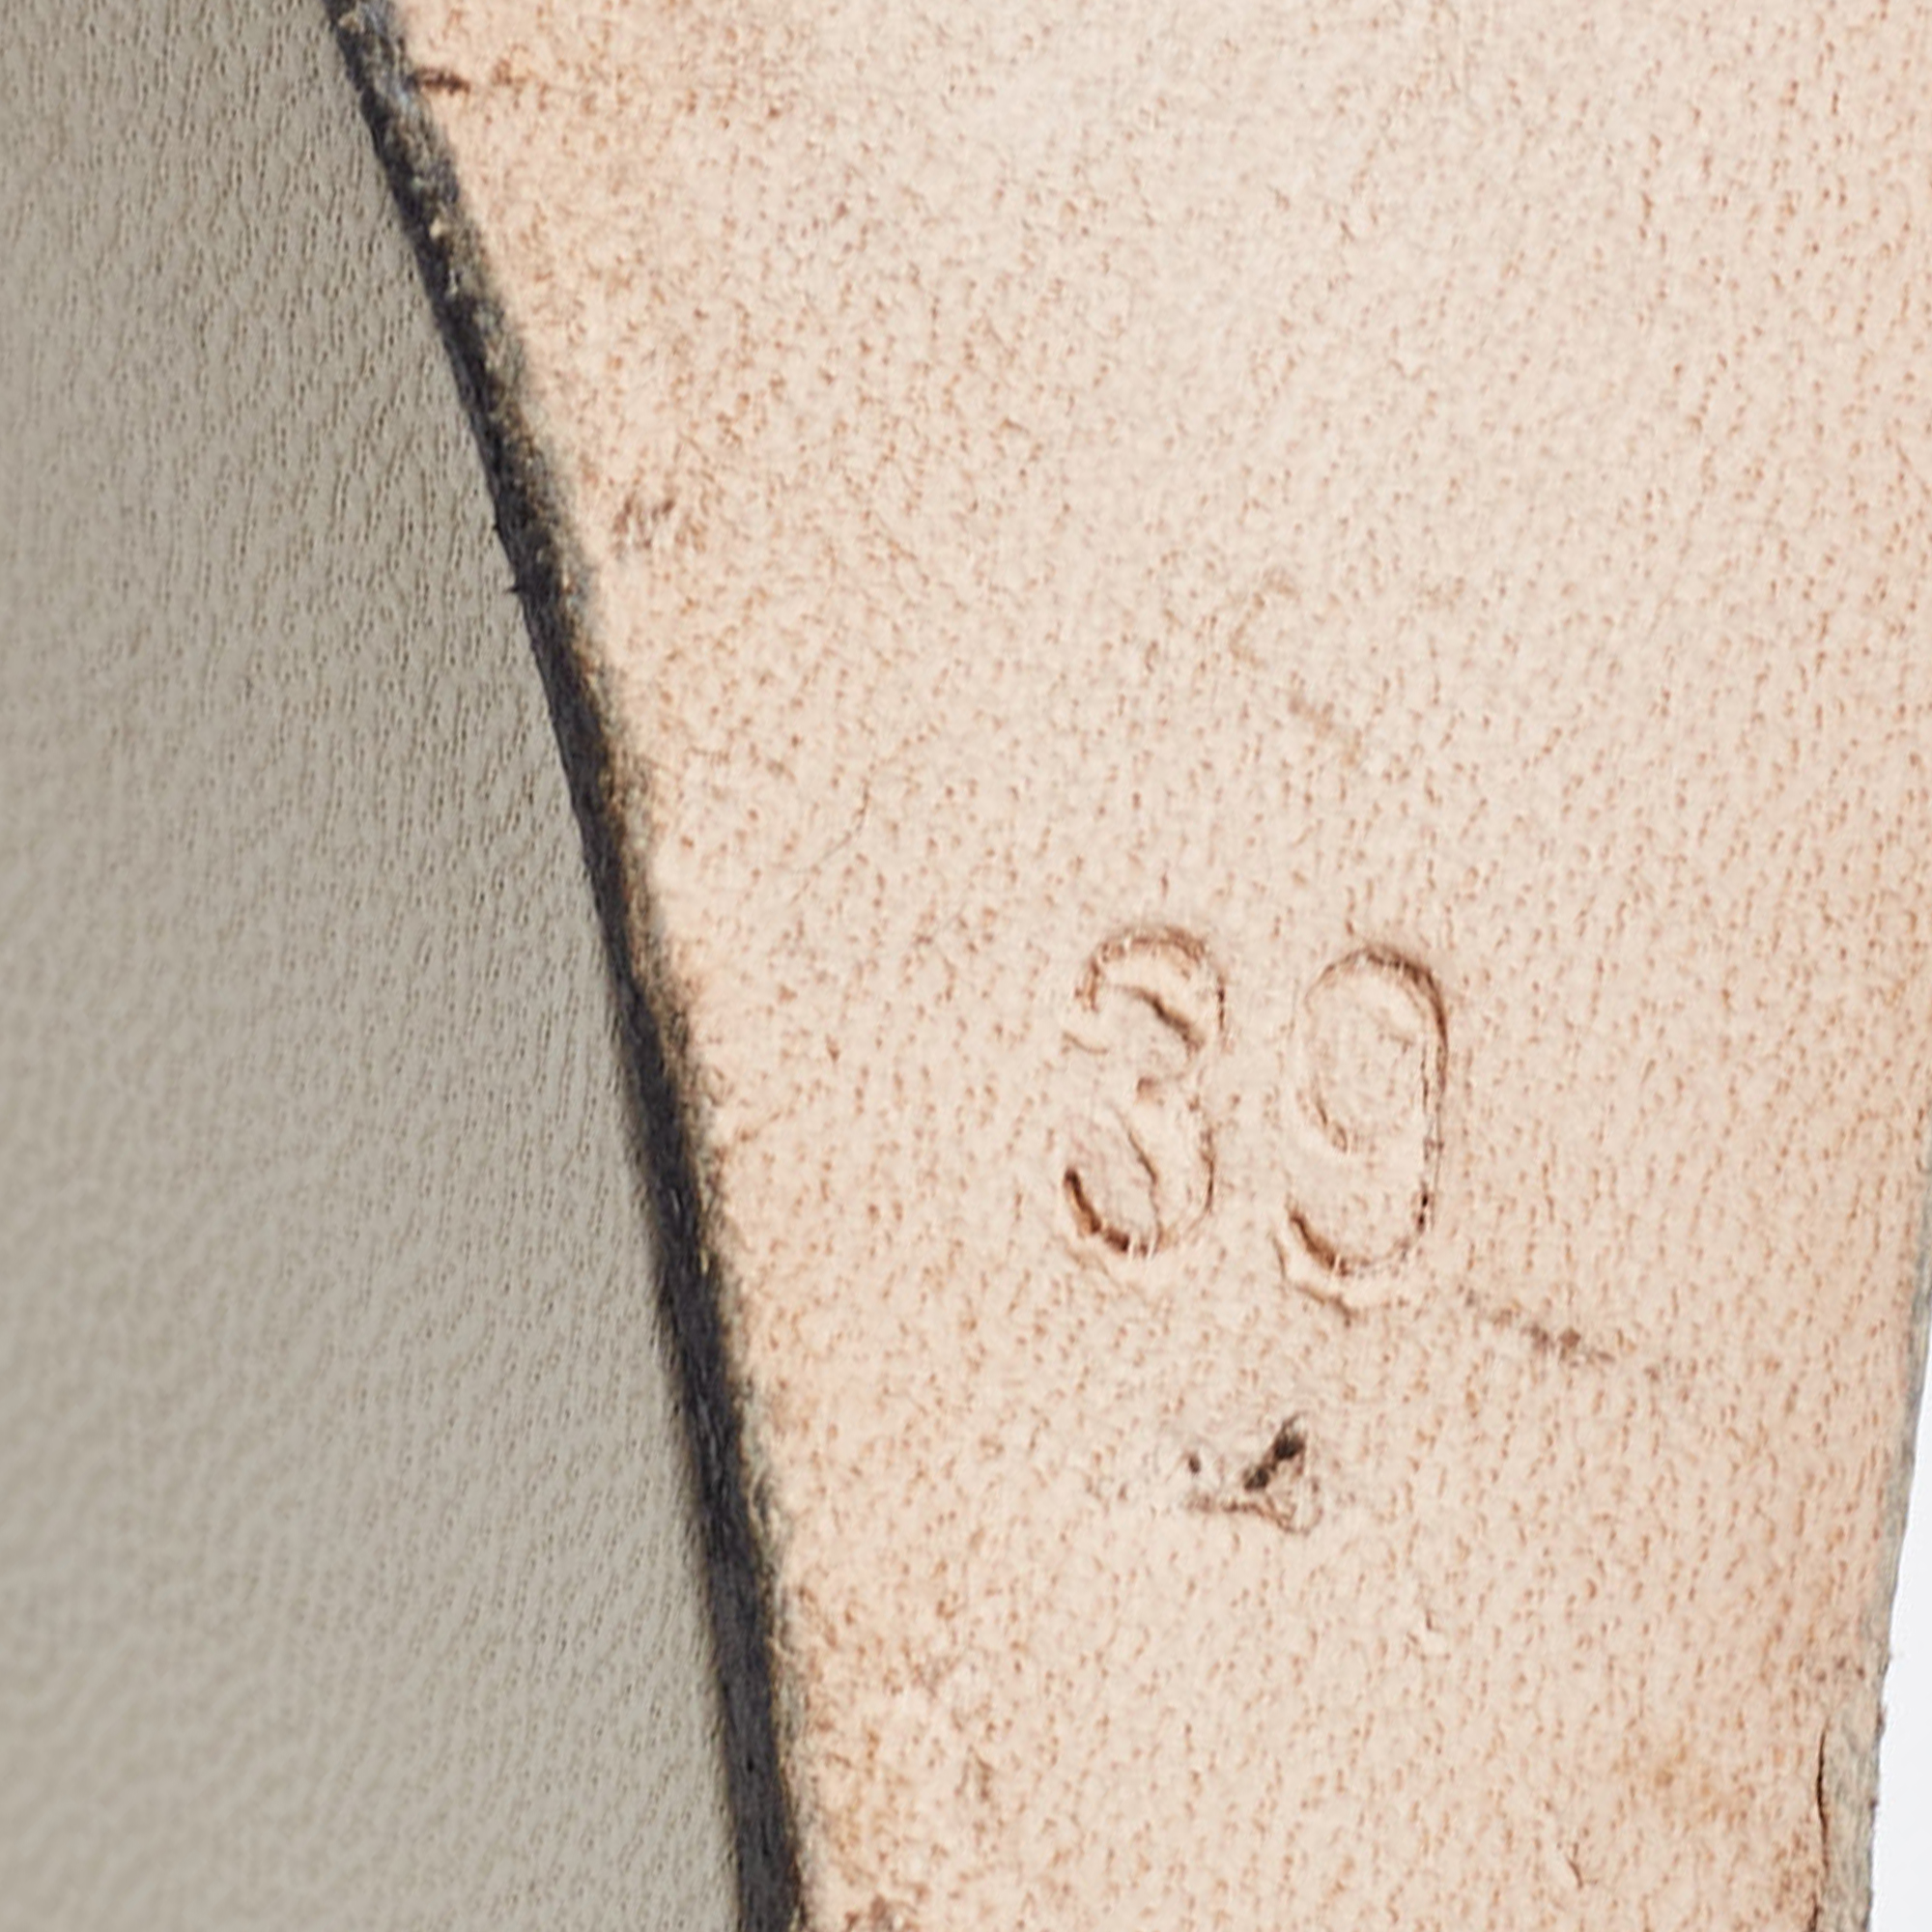 Manolo Blahnik Cream/Blue Leather Wedge Slingback Sandals Size 39